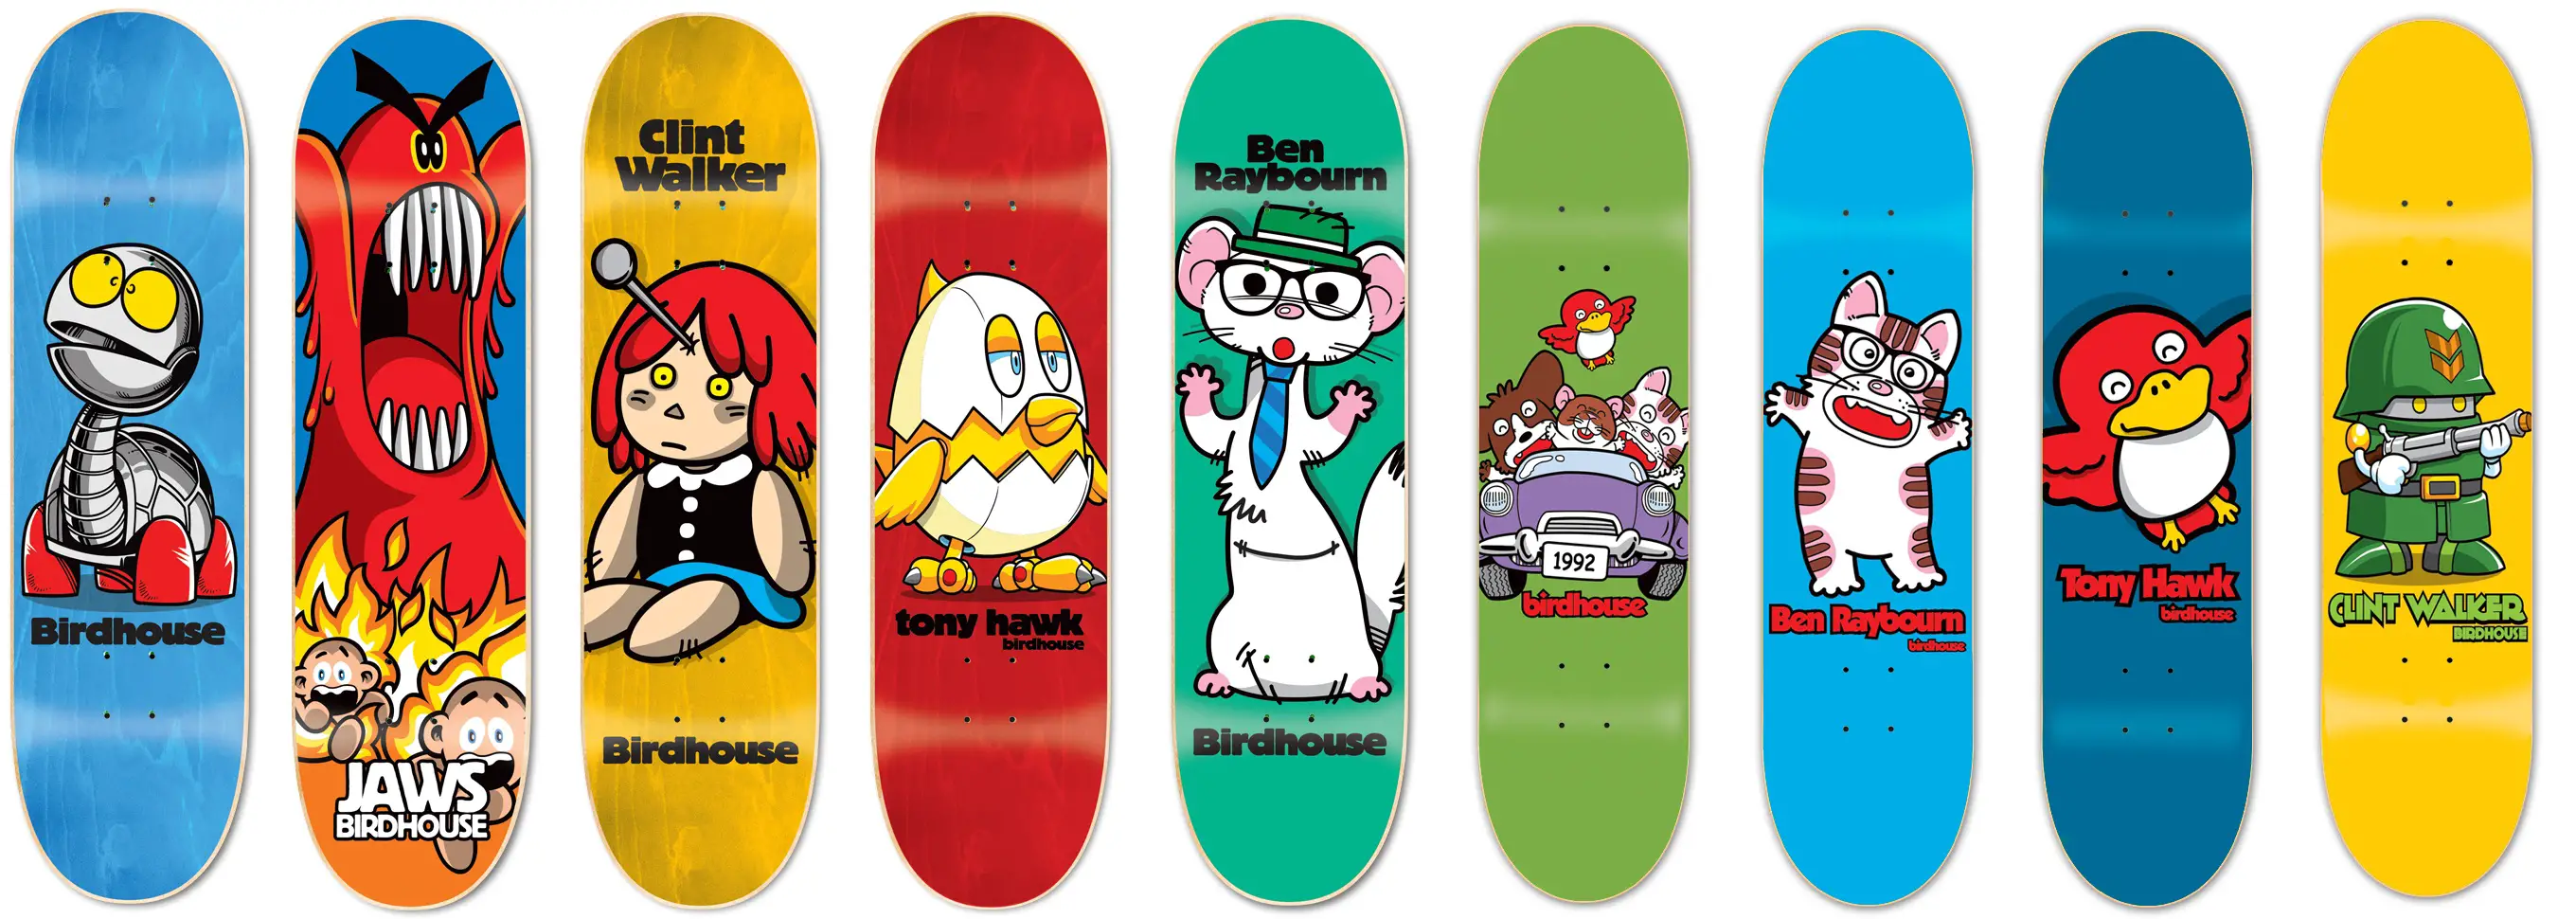 Birdhouse Skateboards Catalog from 2015